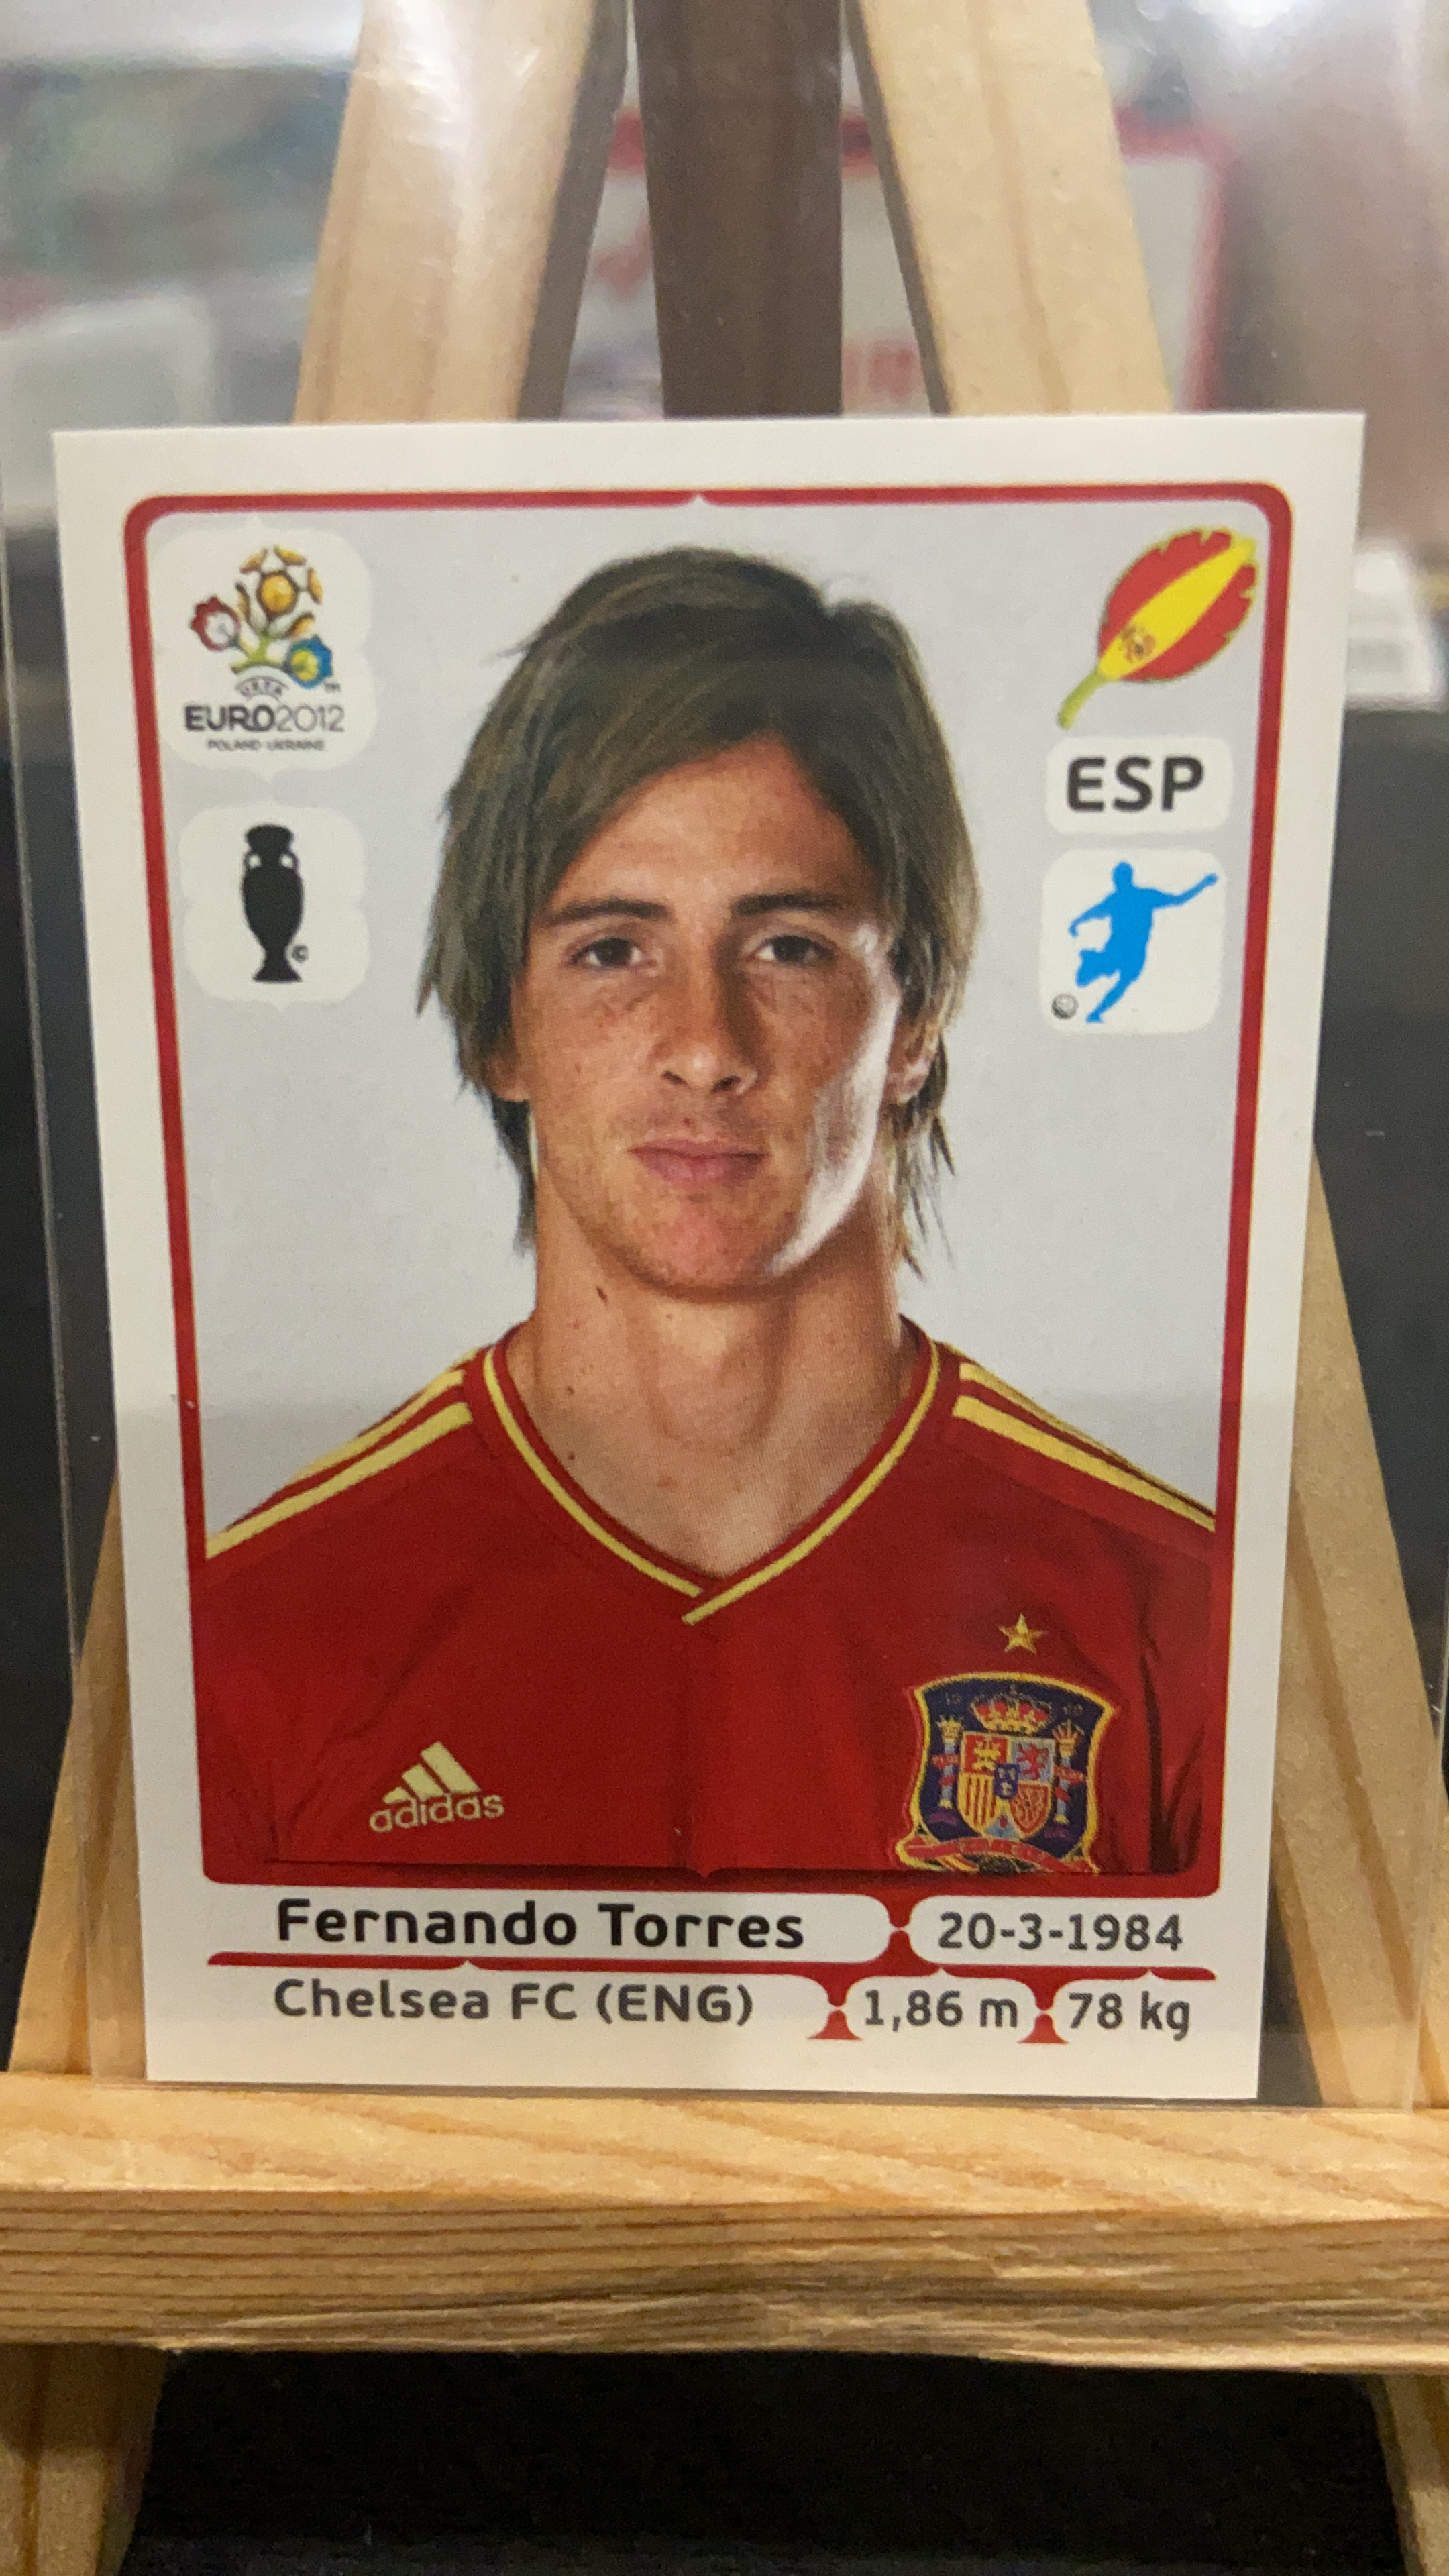 2012 Panini Euro 欧洲杯 贴纸 【不累计】 西班牙 利物浦 马竞 费尔南多 托雷斯 圣婴 凑套